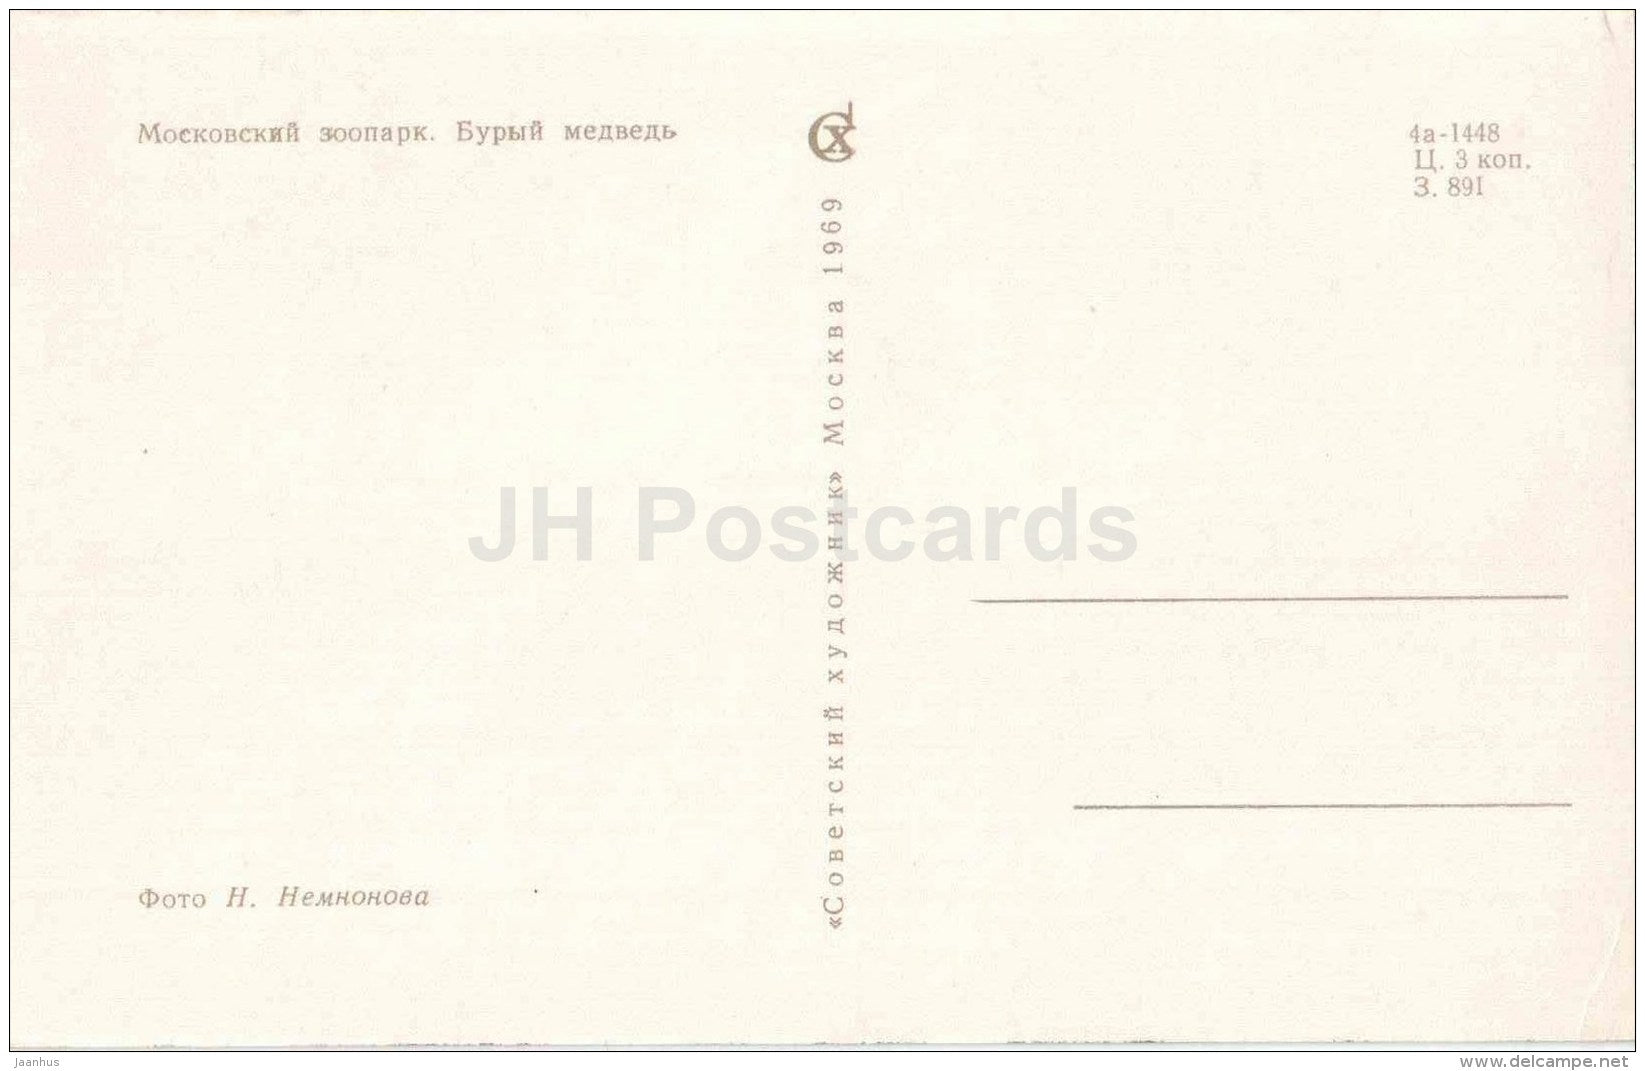 Brown Bear - Ursus arctos - Moscow Zoo - 1969 - Russia USSR - unused - JH Postcards